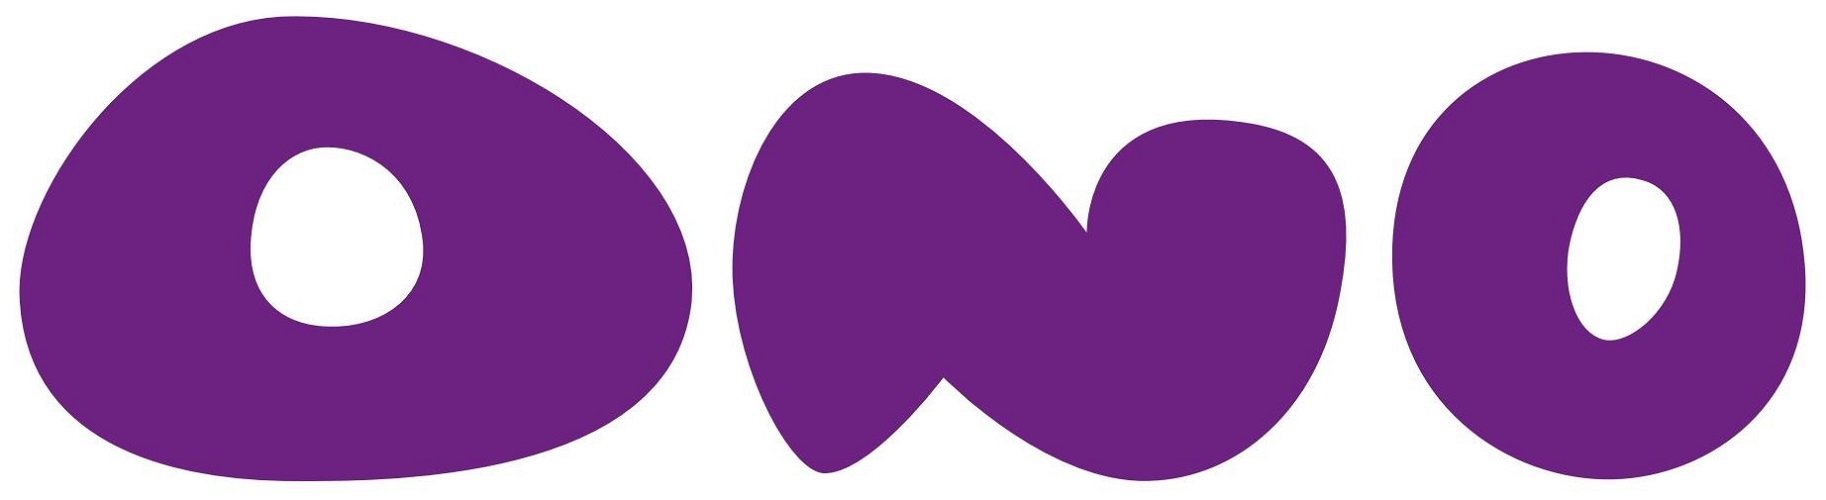 Ono Logo png